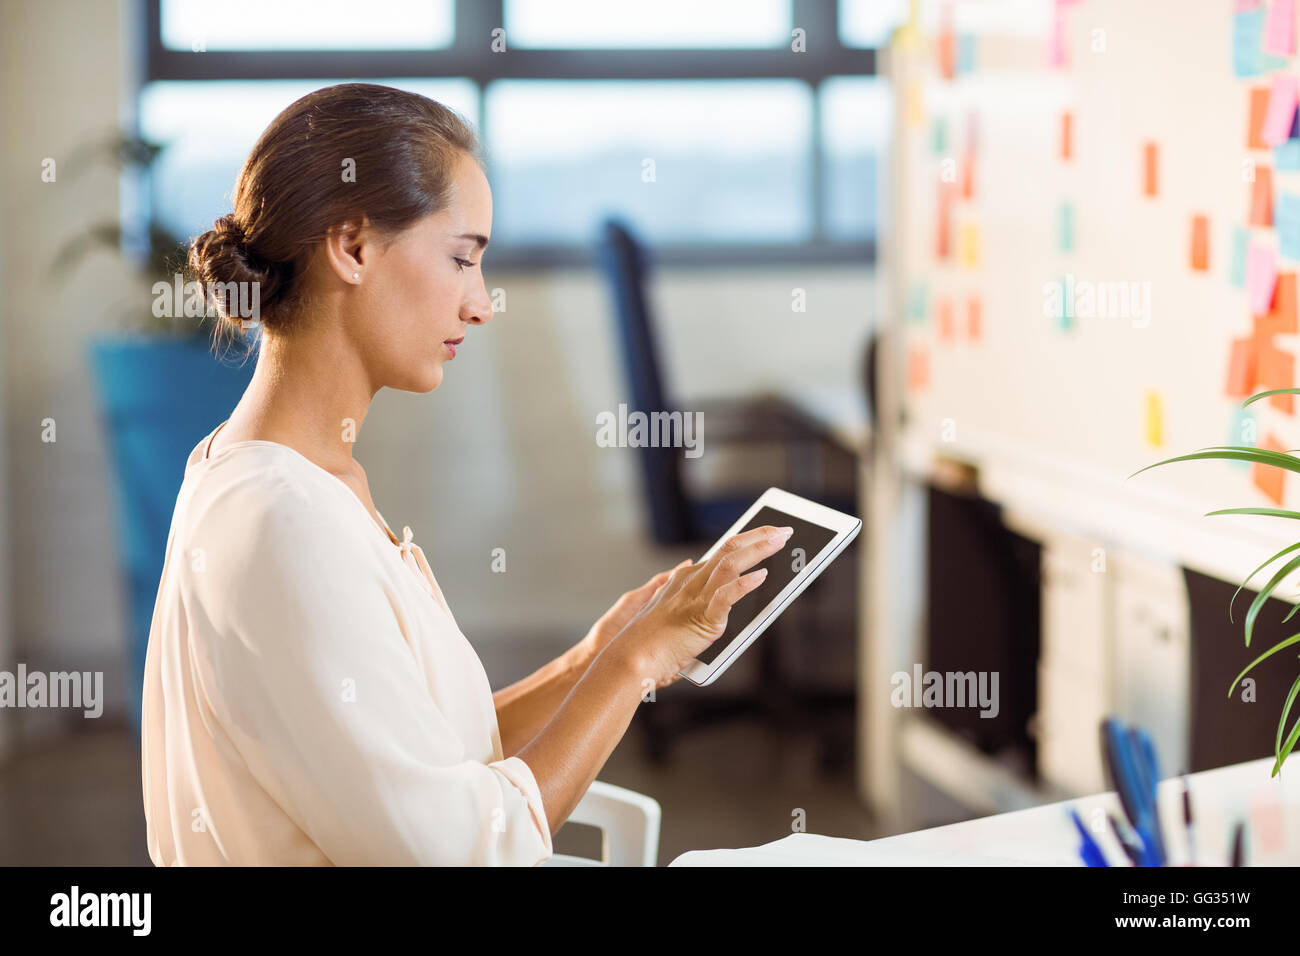 Business executive using digital tablet Stock Photo